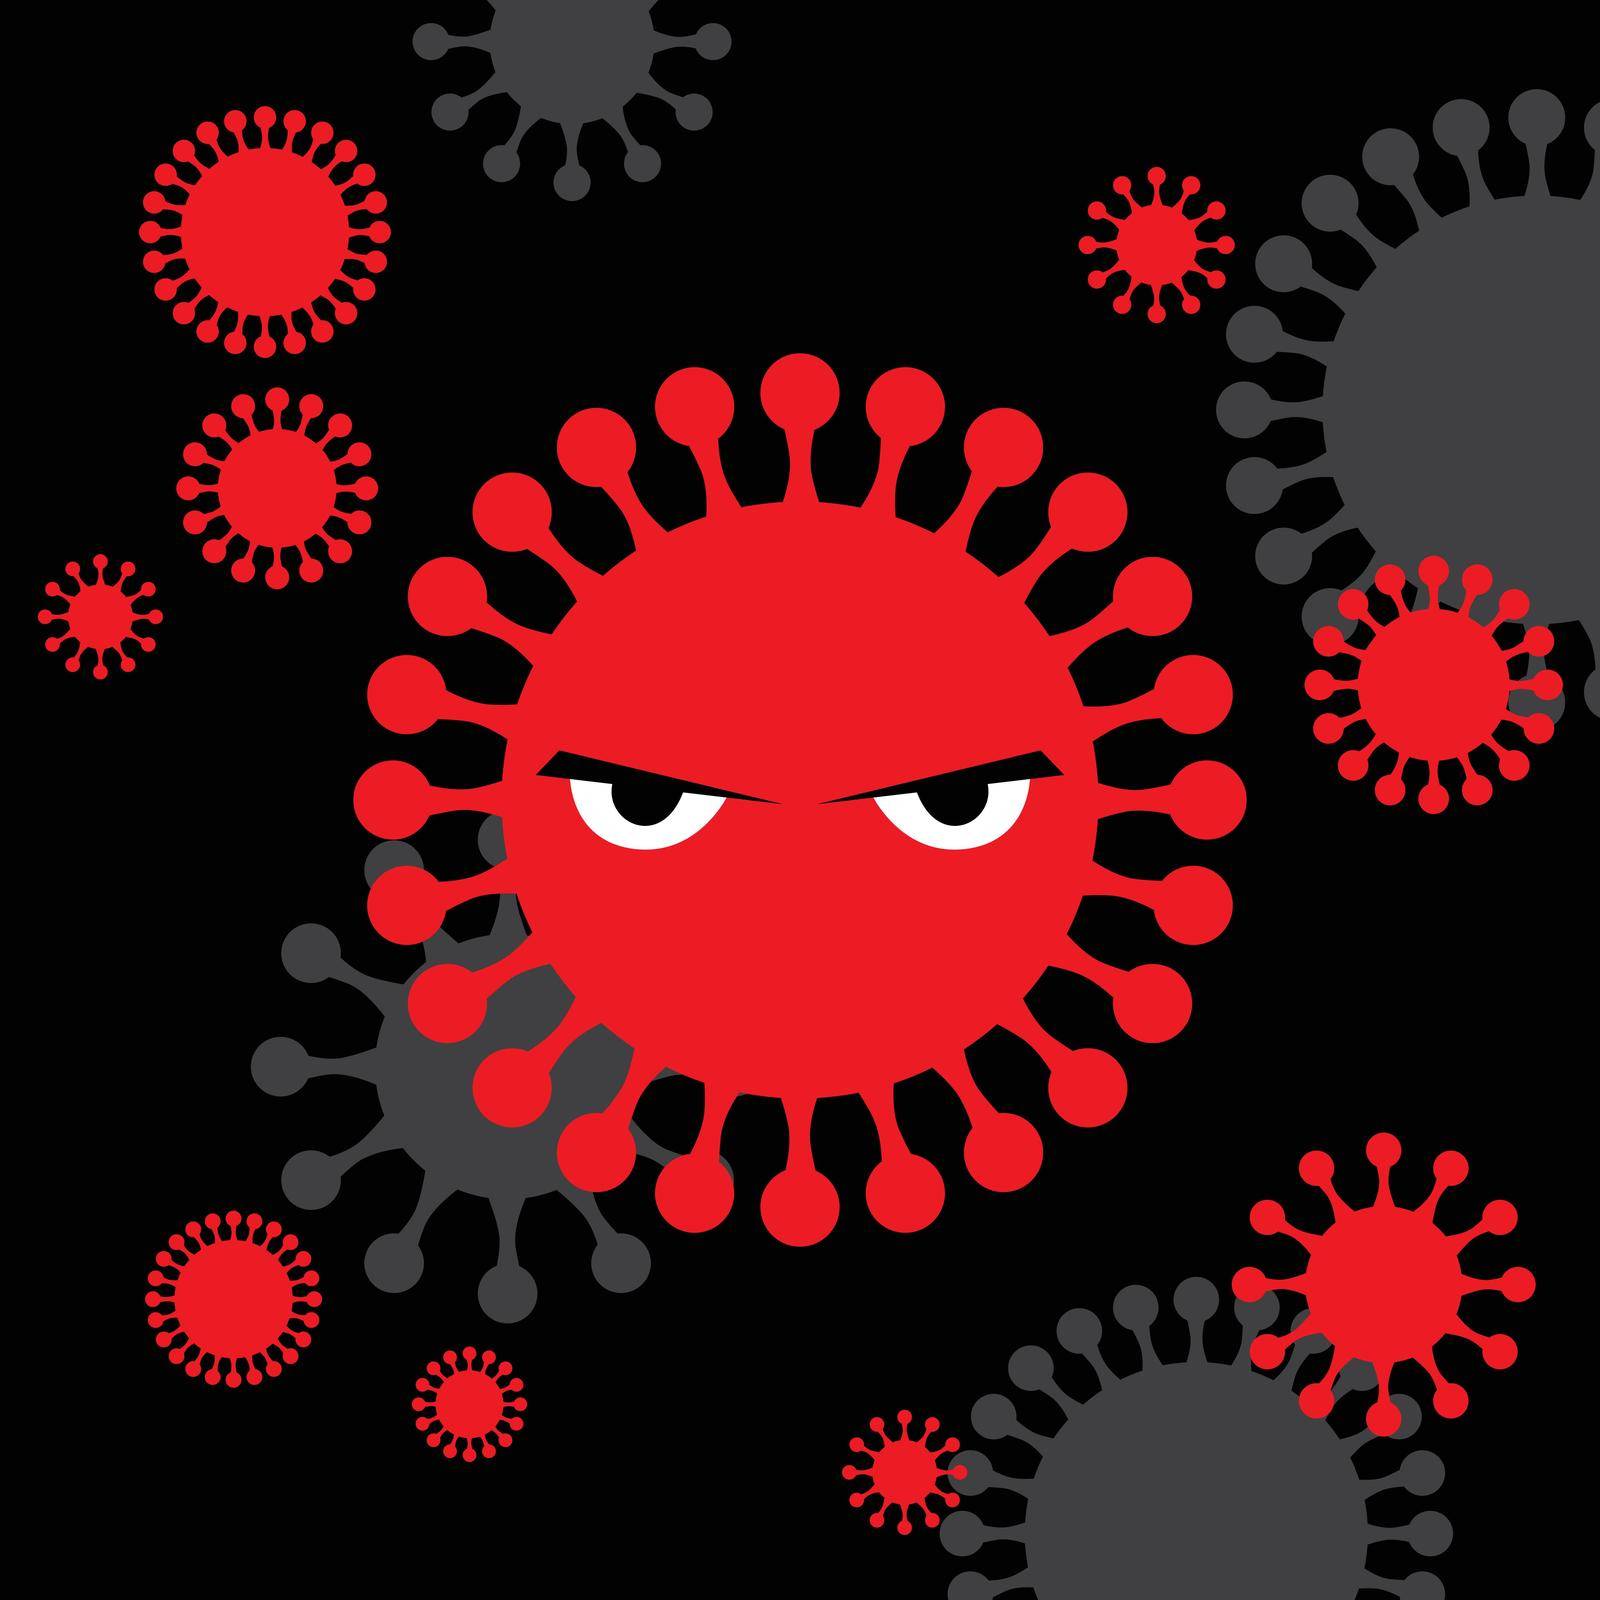 Corona Virus Angry Character on black background by kisika